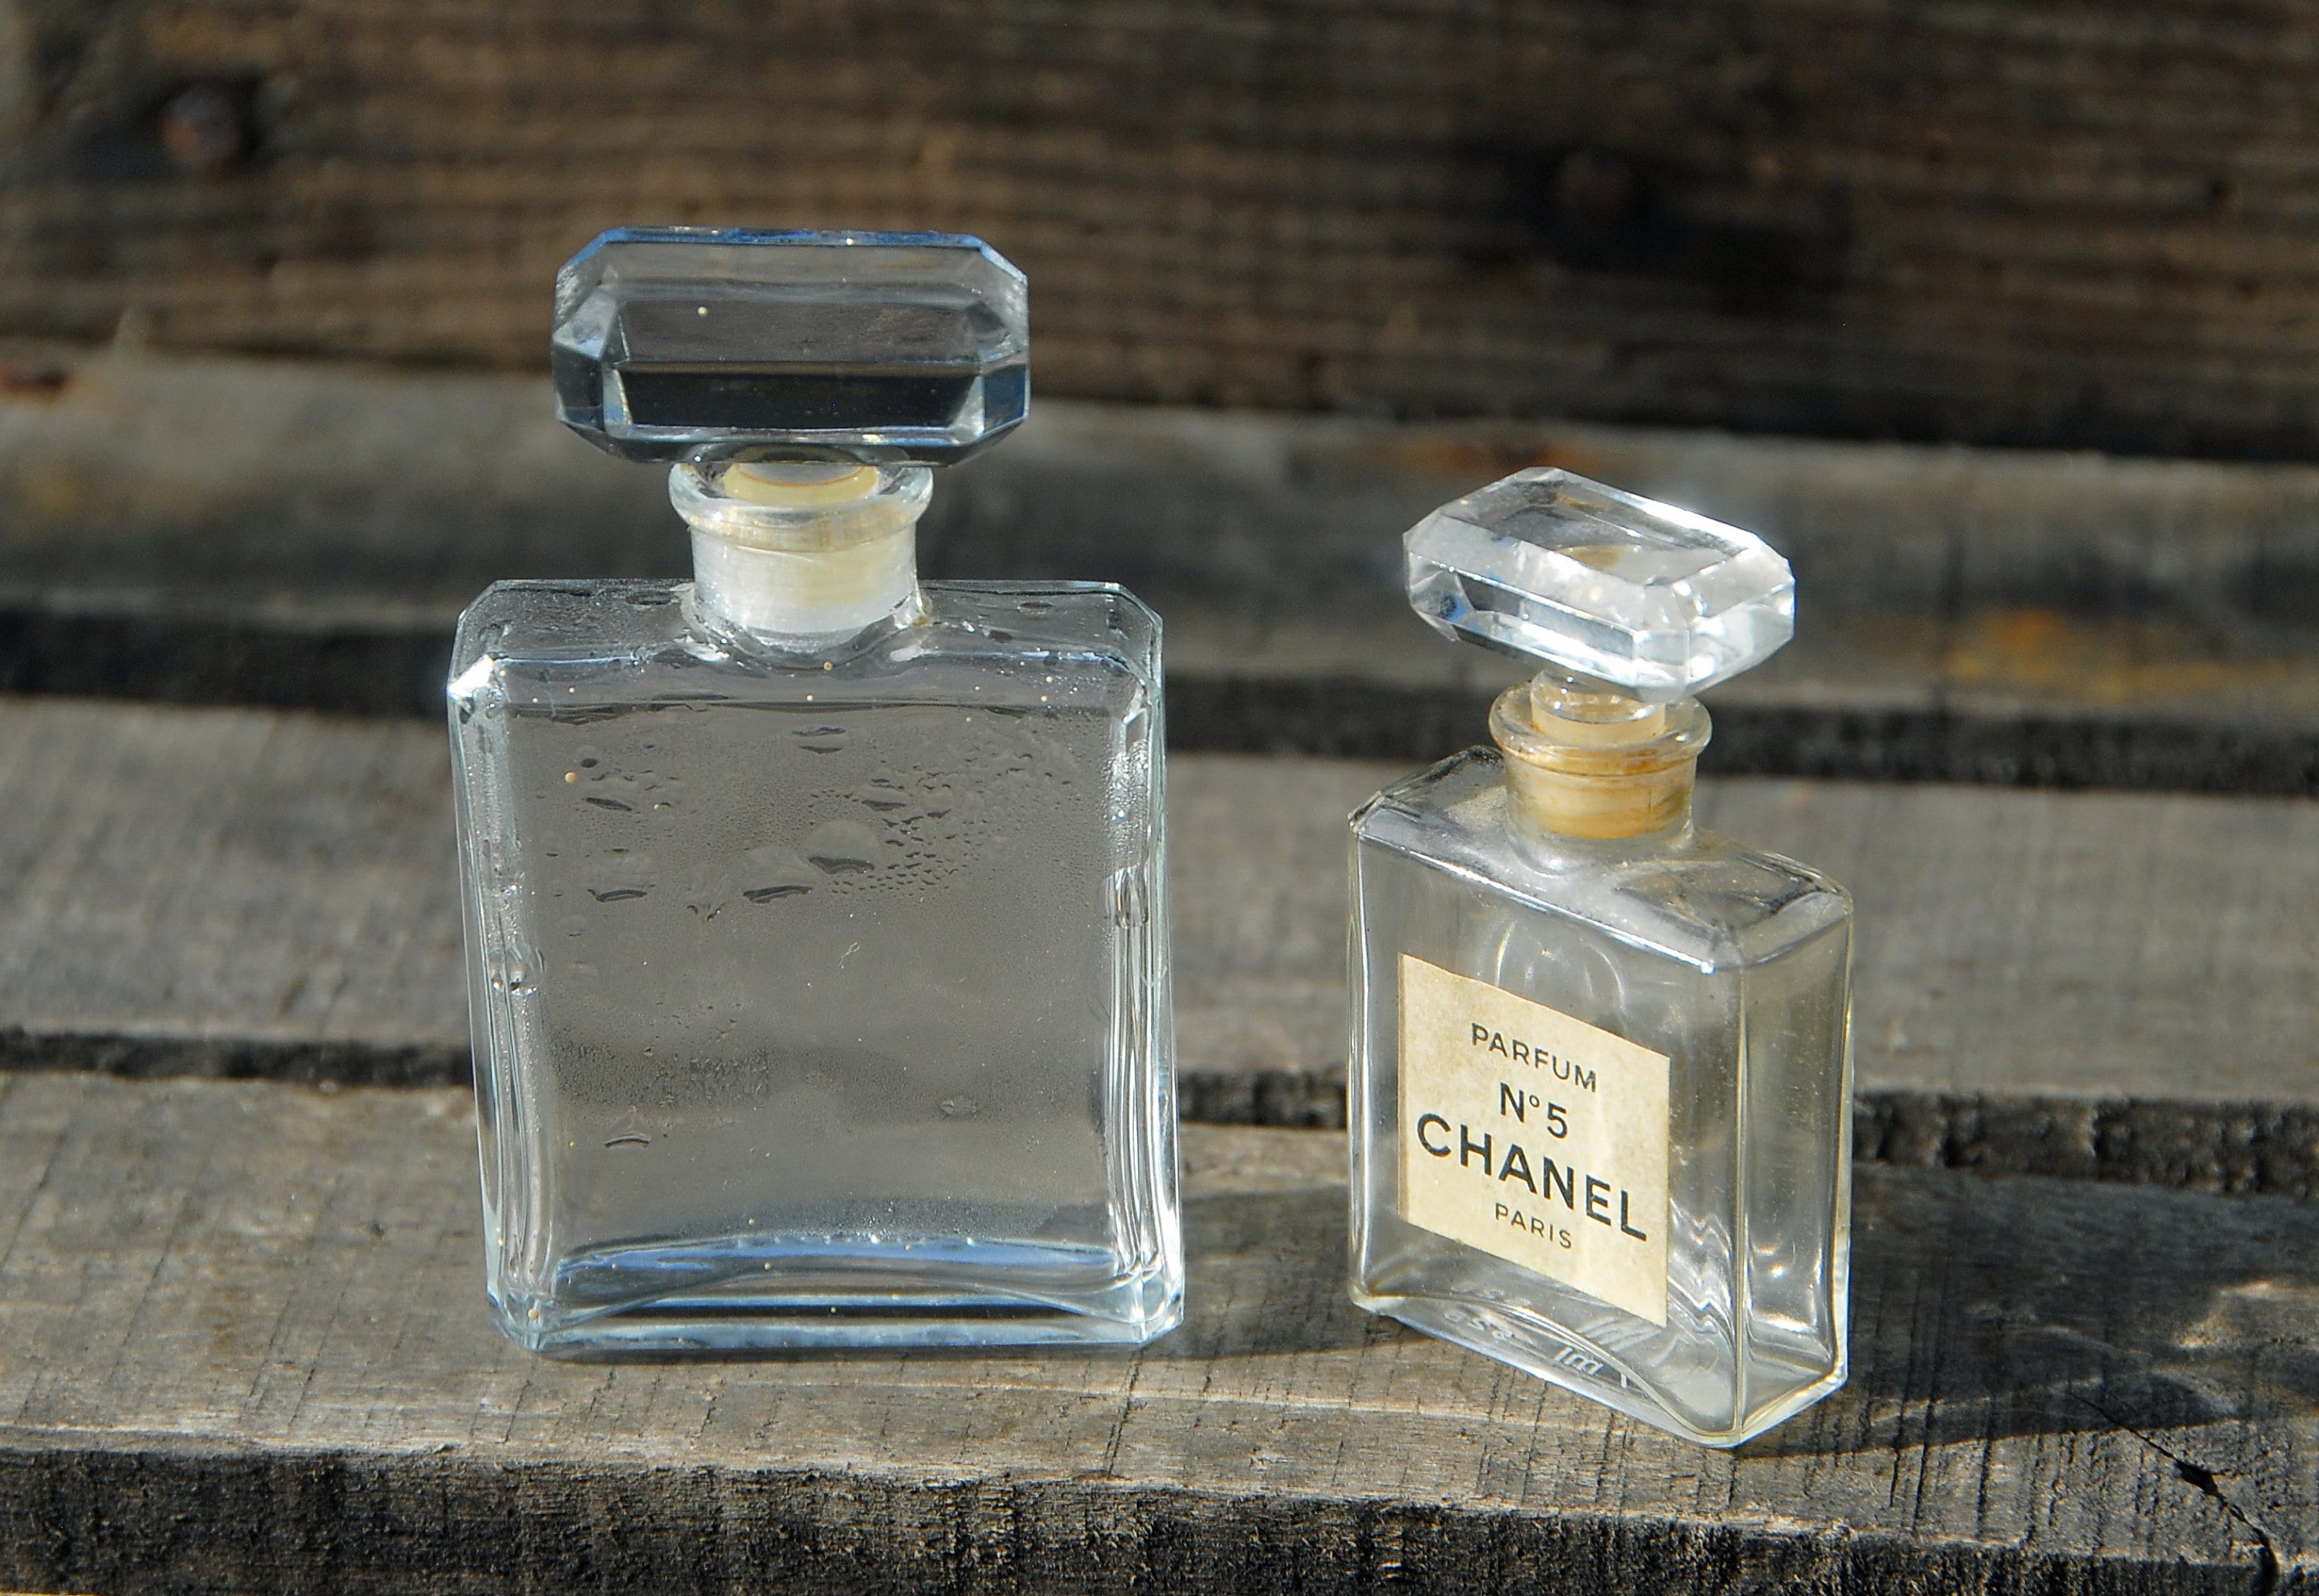 Glass and Amber Liquid 2000mL Chanel No. 5 Eau de Parum Factice